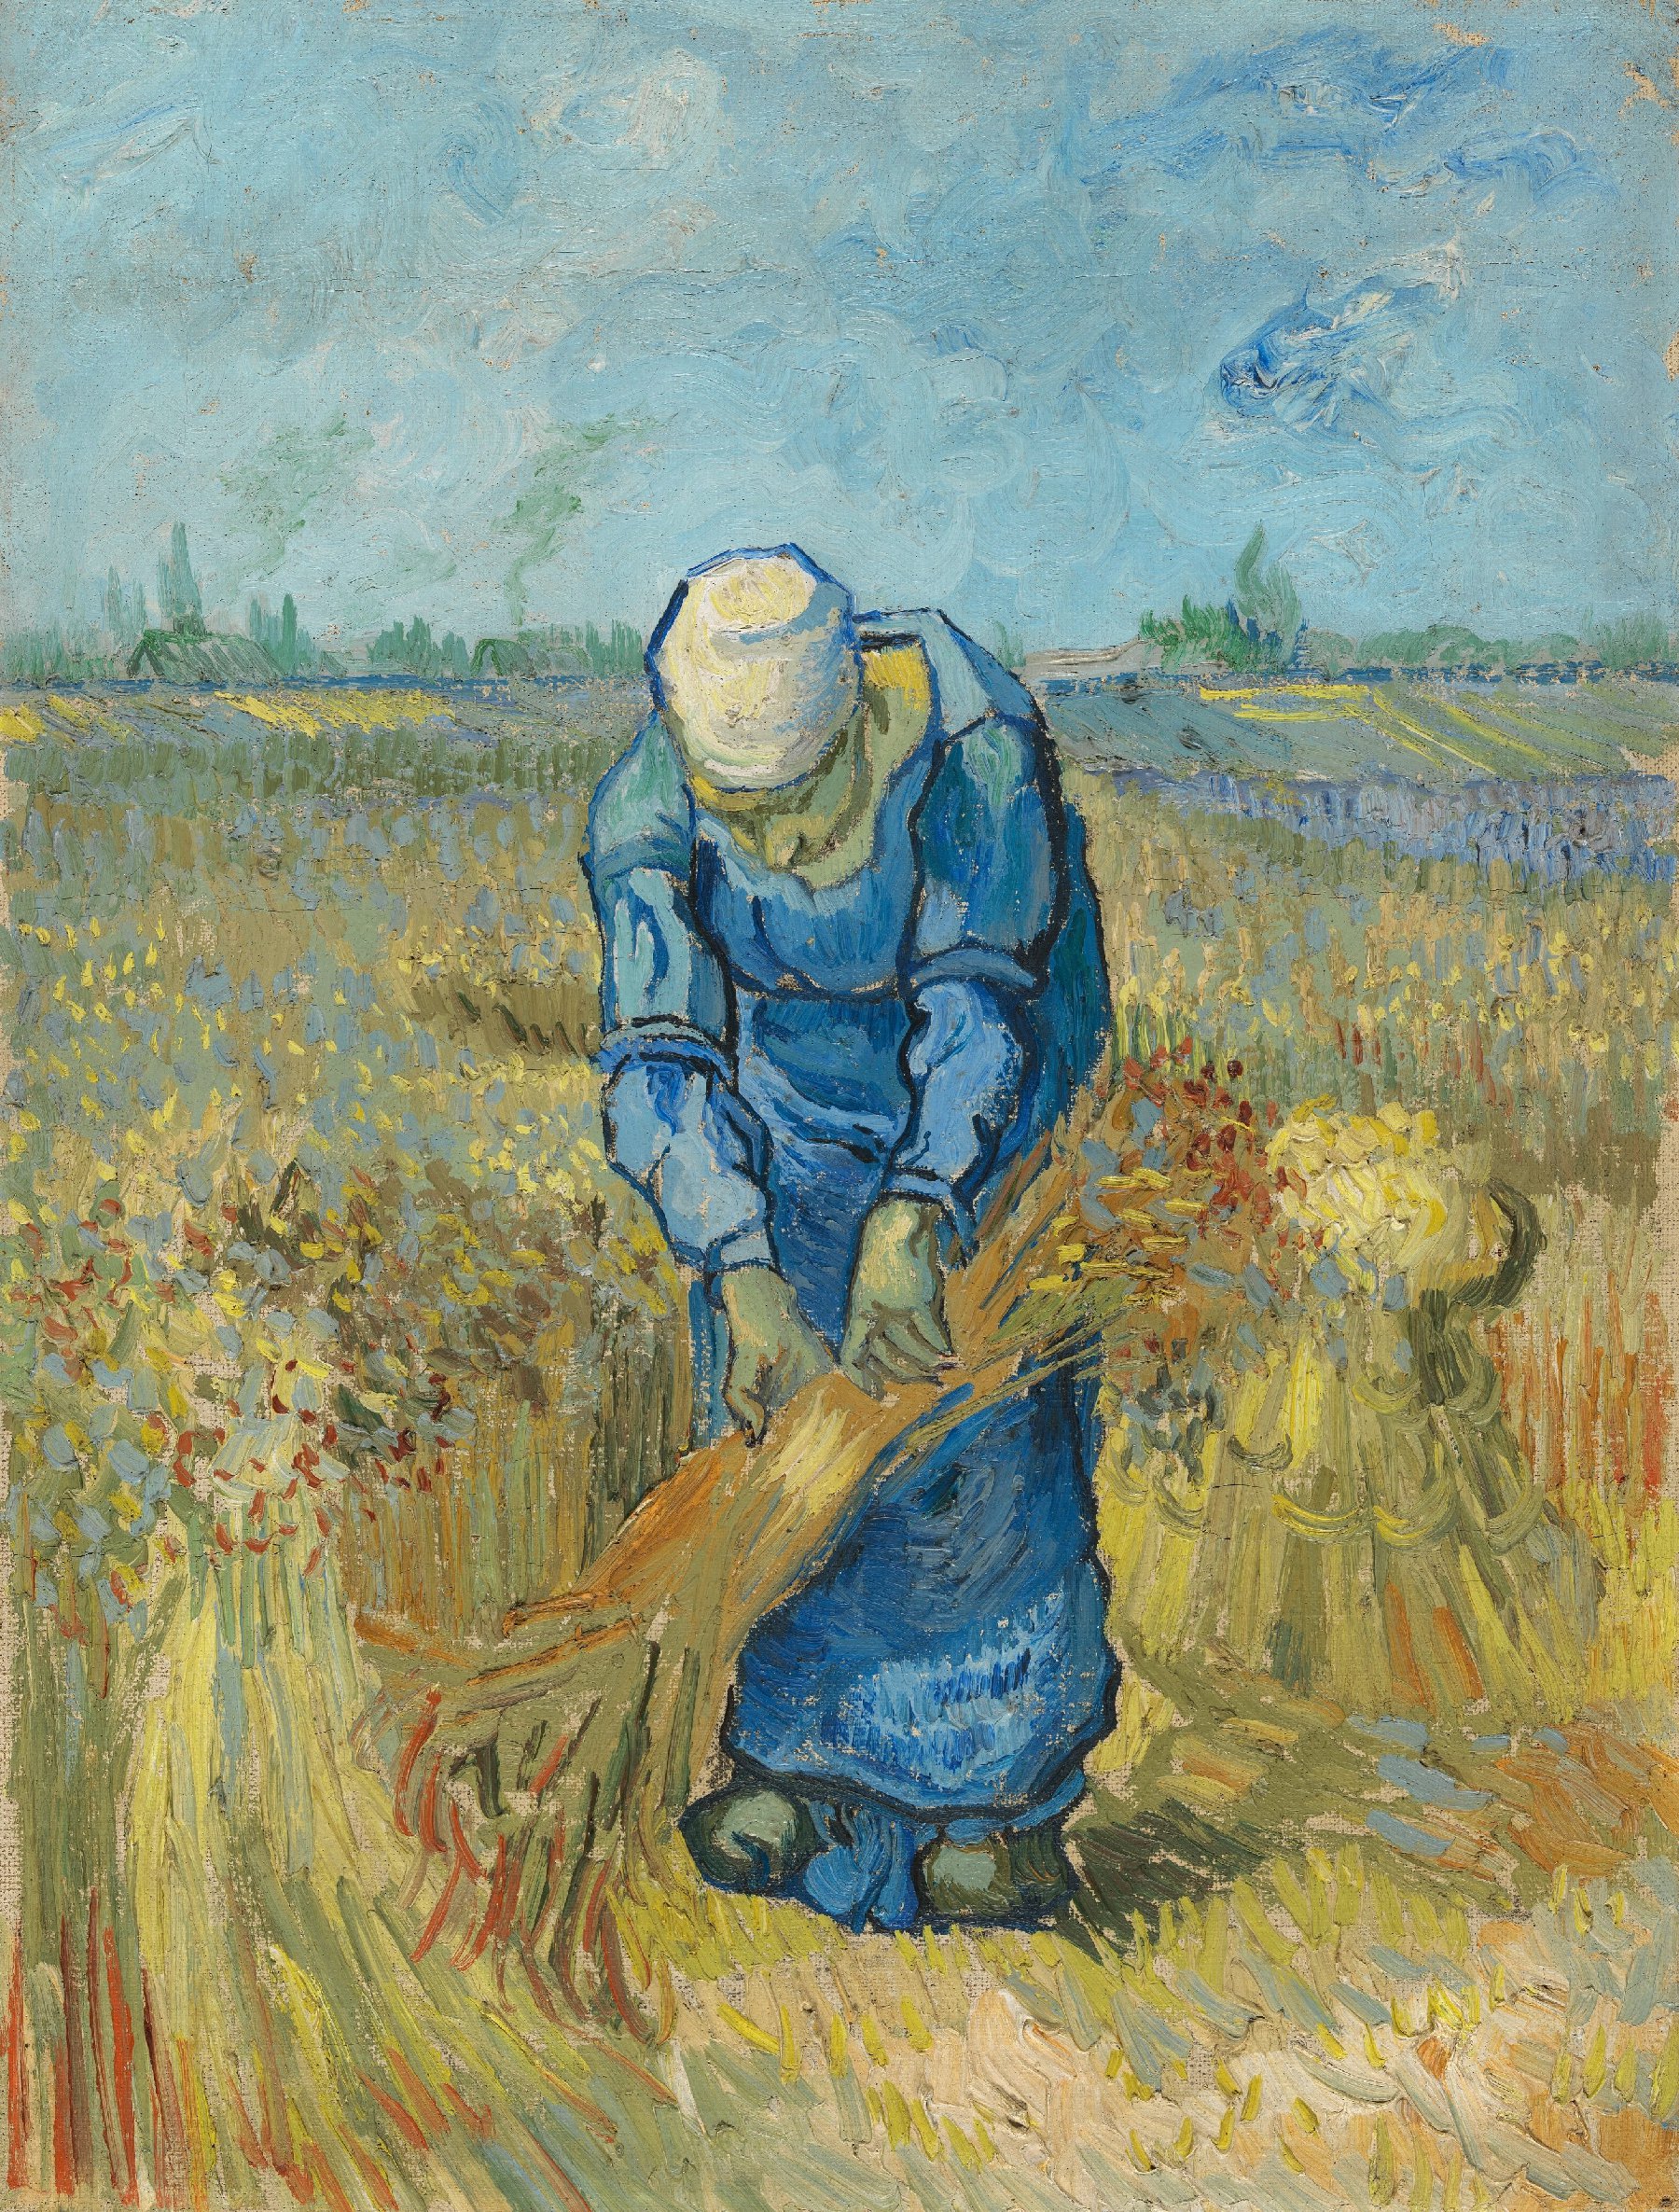 De schovenbindster (naar Millet) Vincent van Gogh (1853 - 1890), Saint-Rémy-de-Provence, september 1889